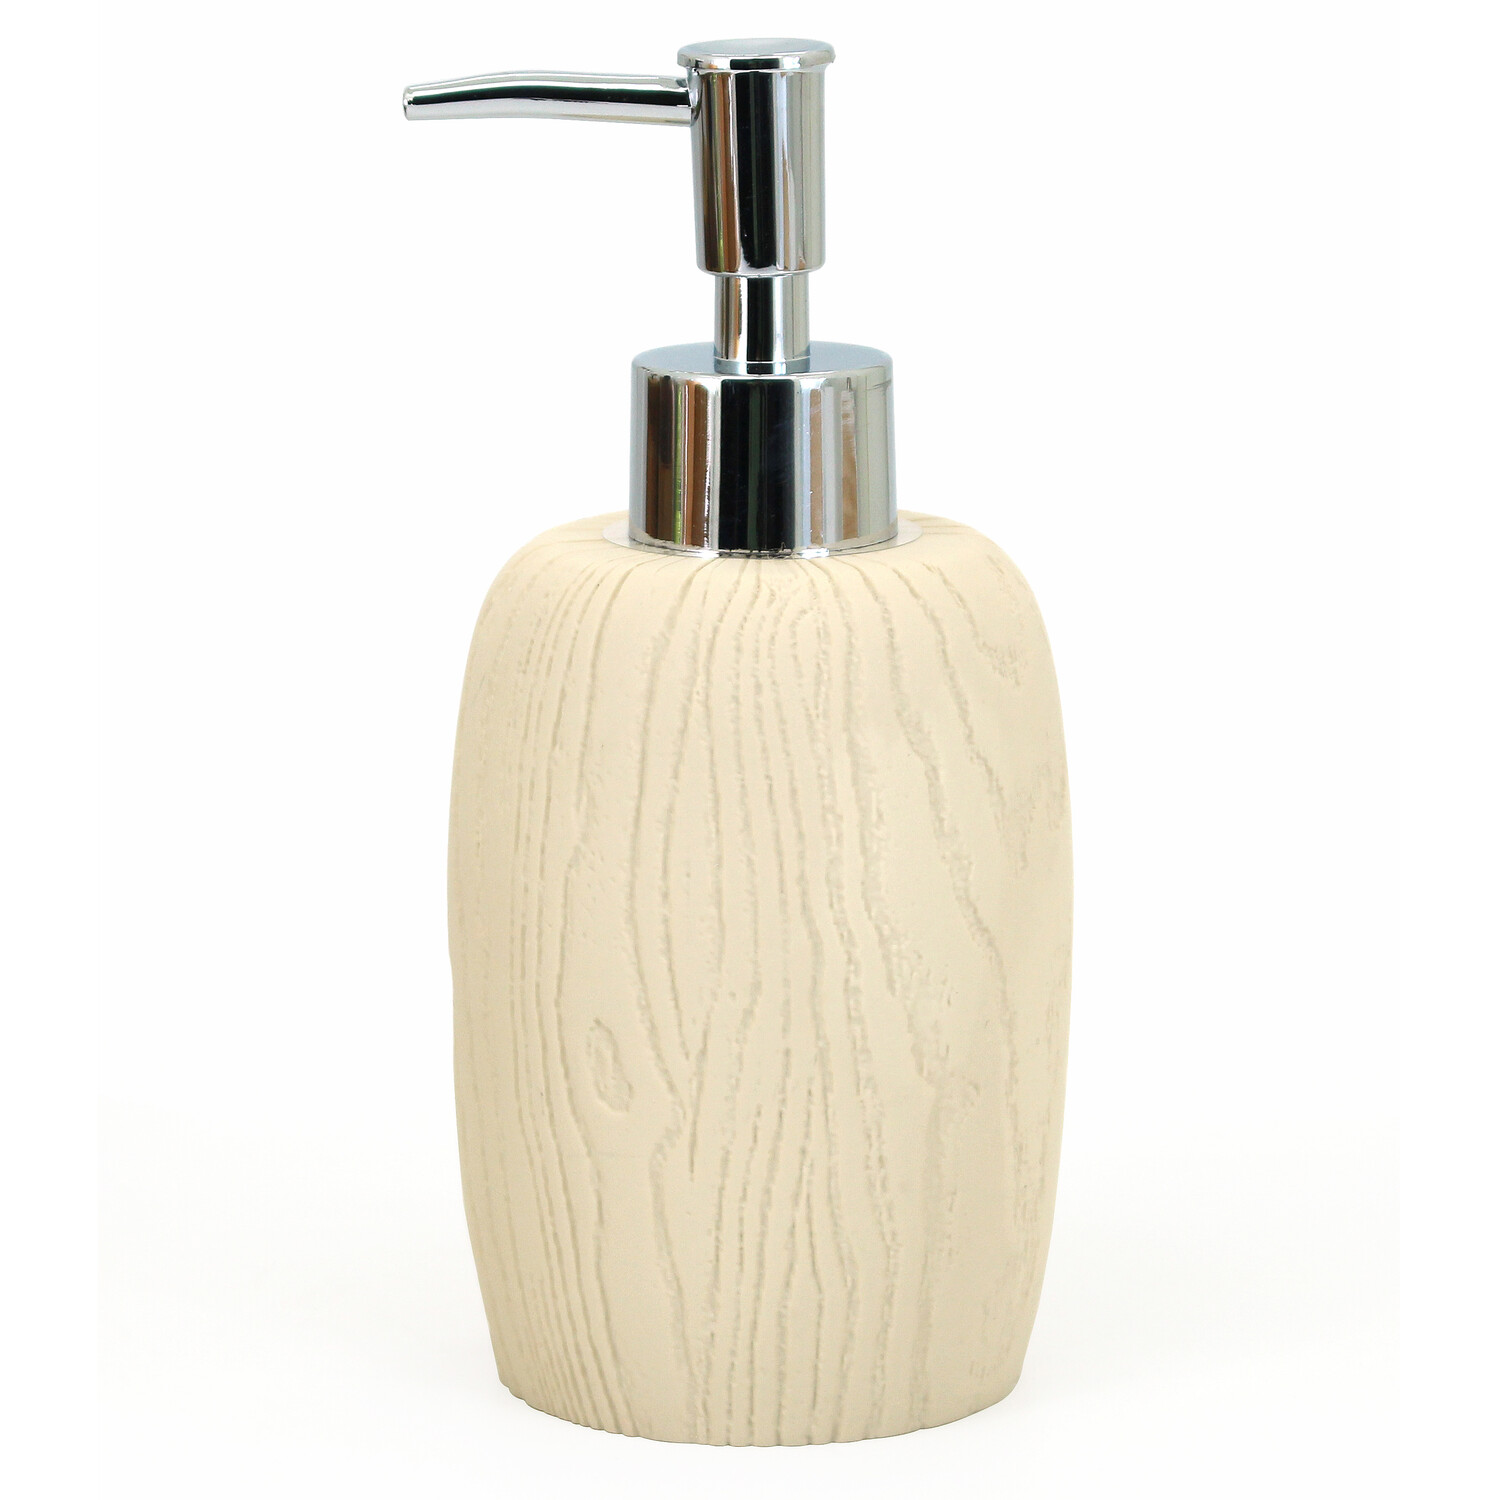 Wood Grain Soap Dispenser - Beige Image